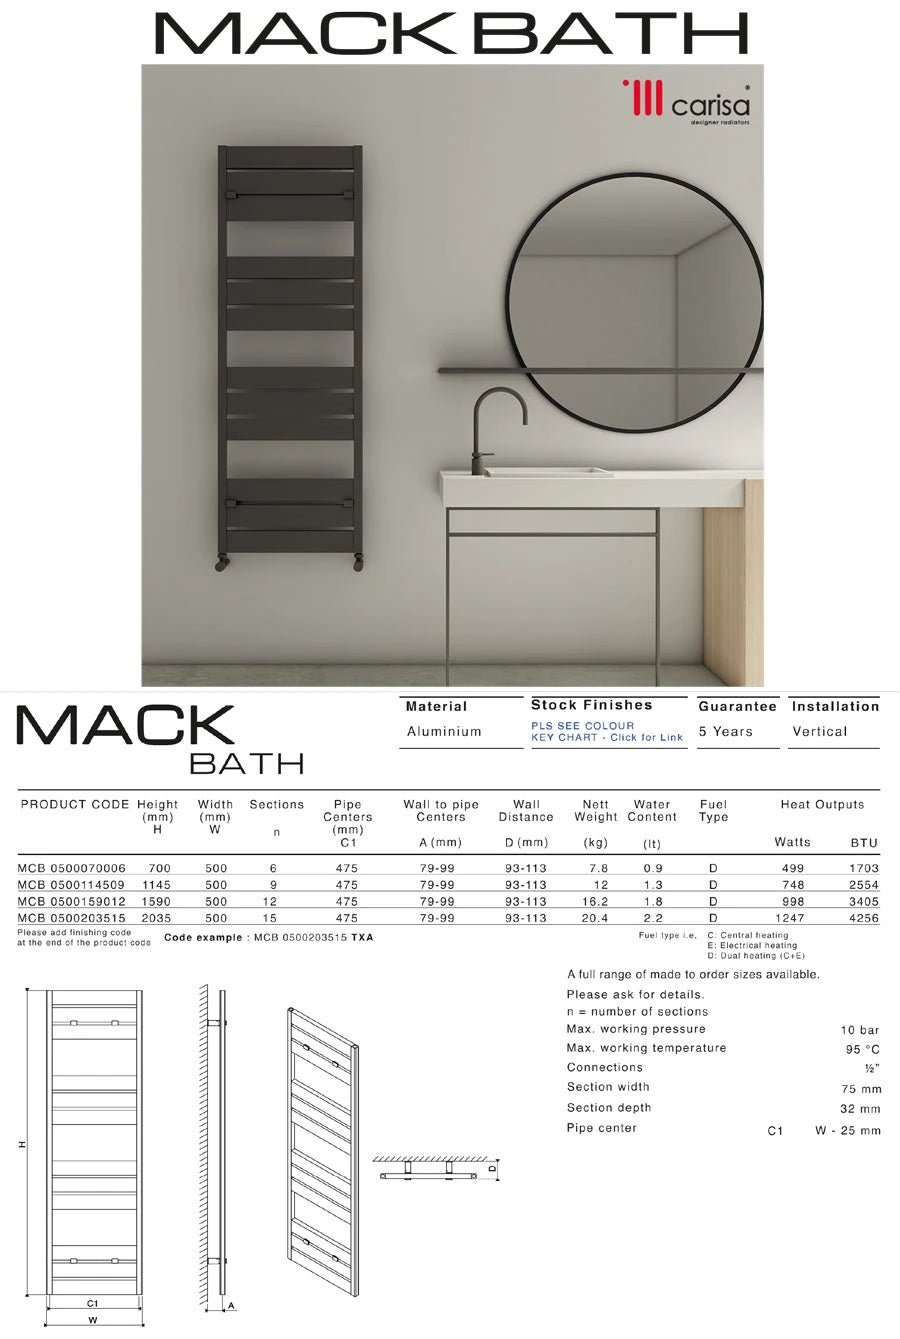 mack bath carisa technical information specification drawing datasheet